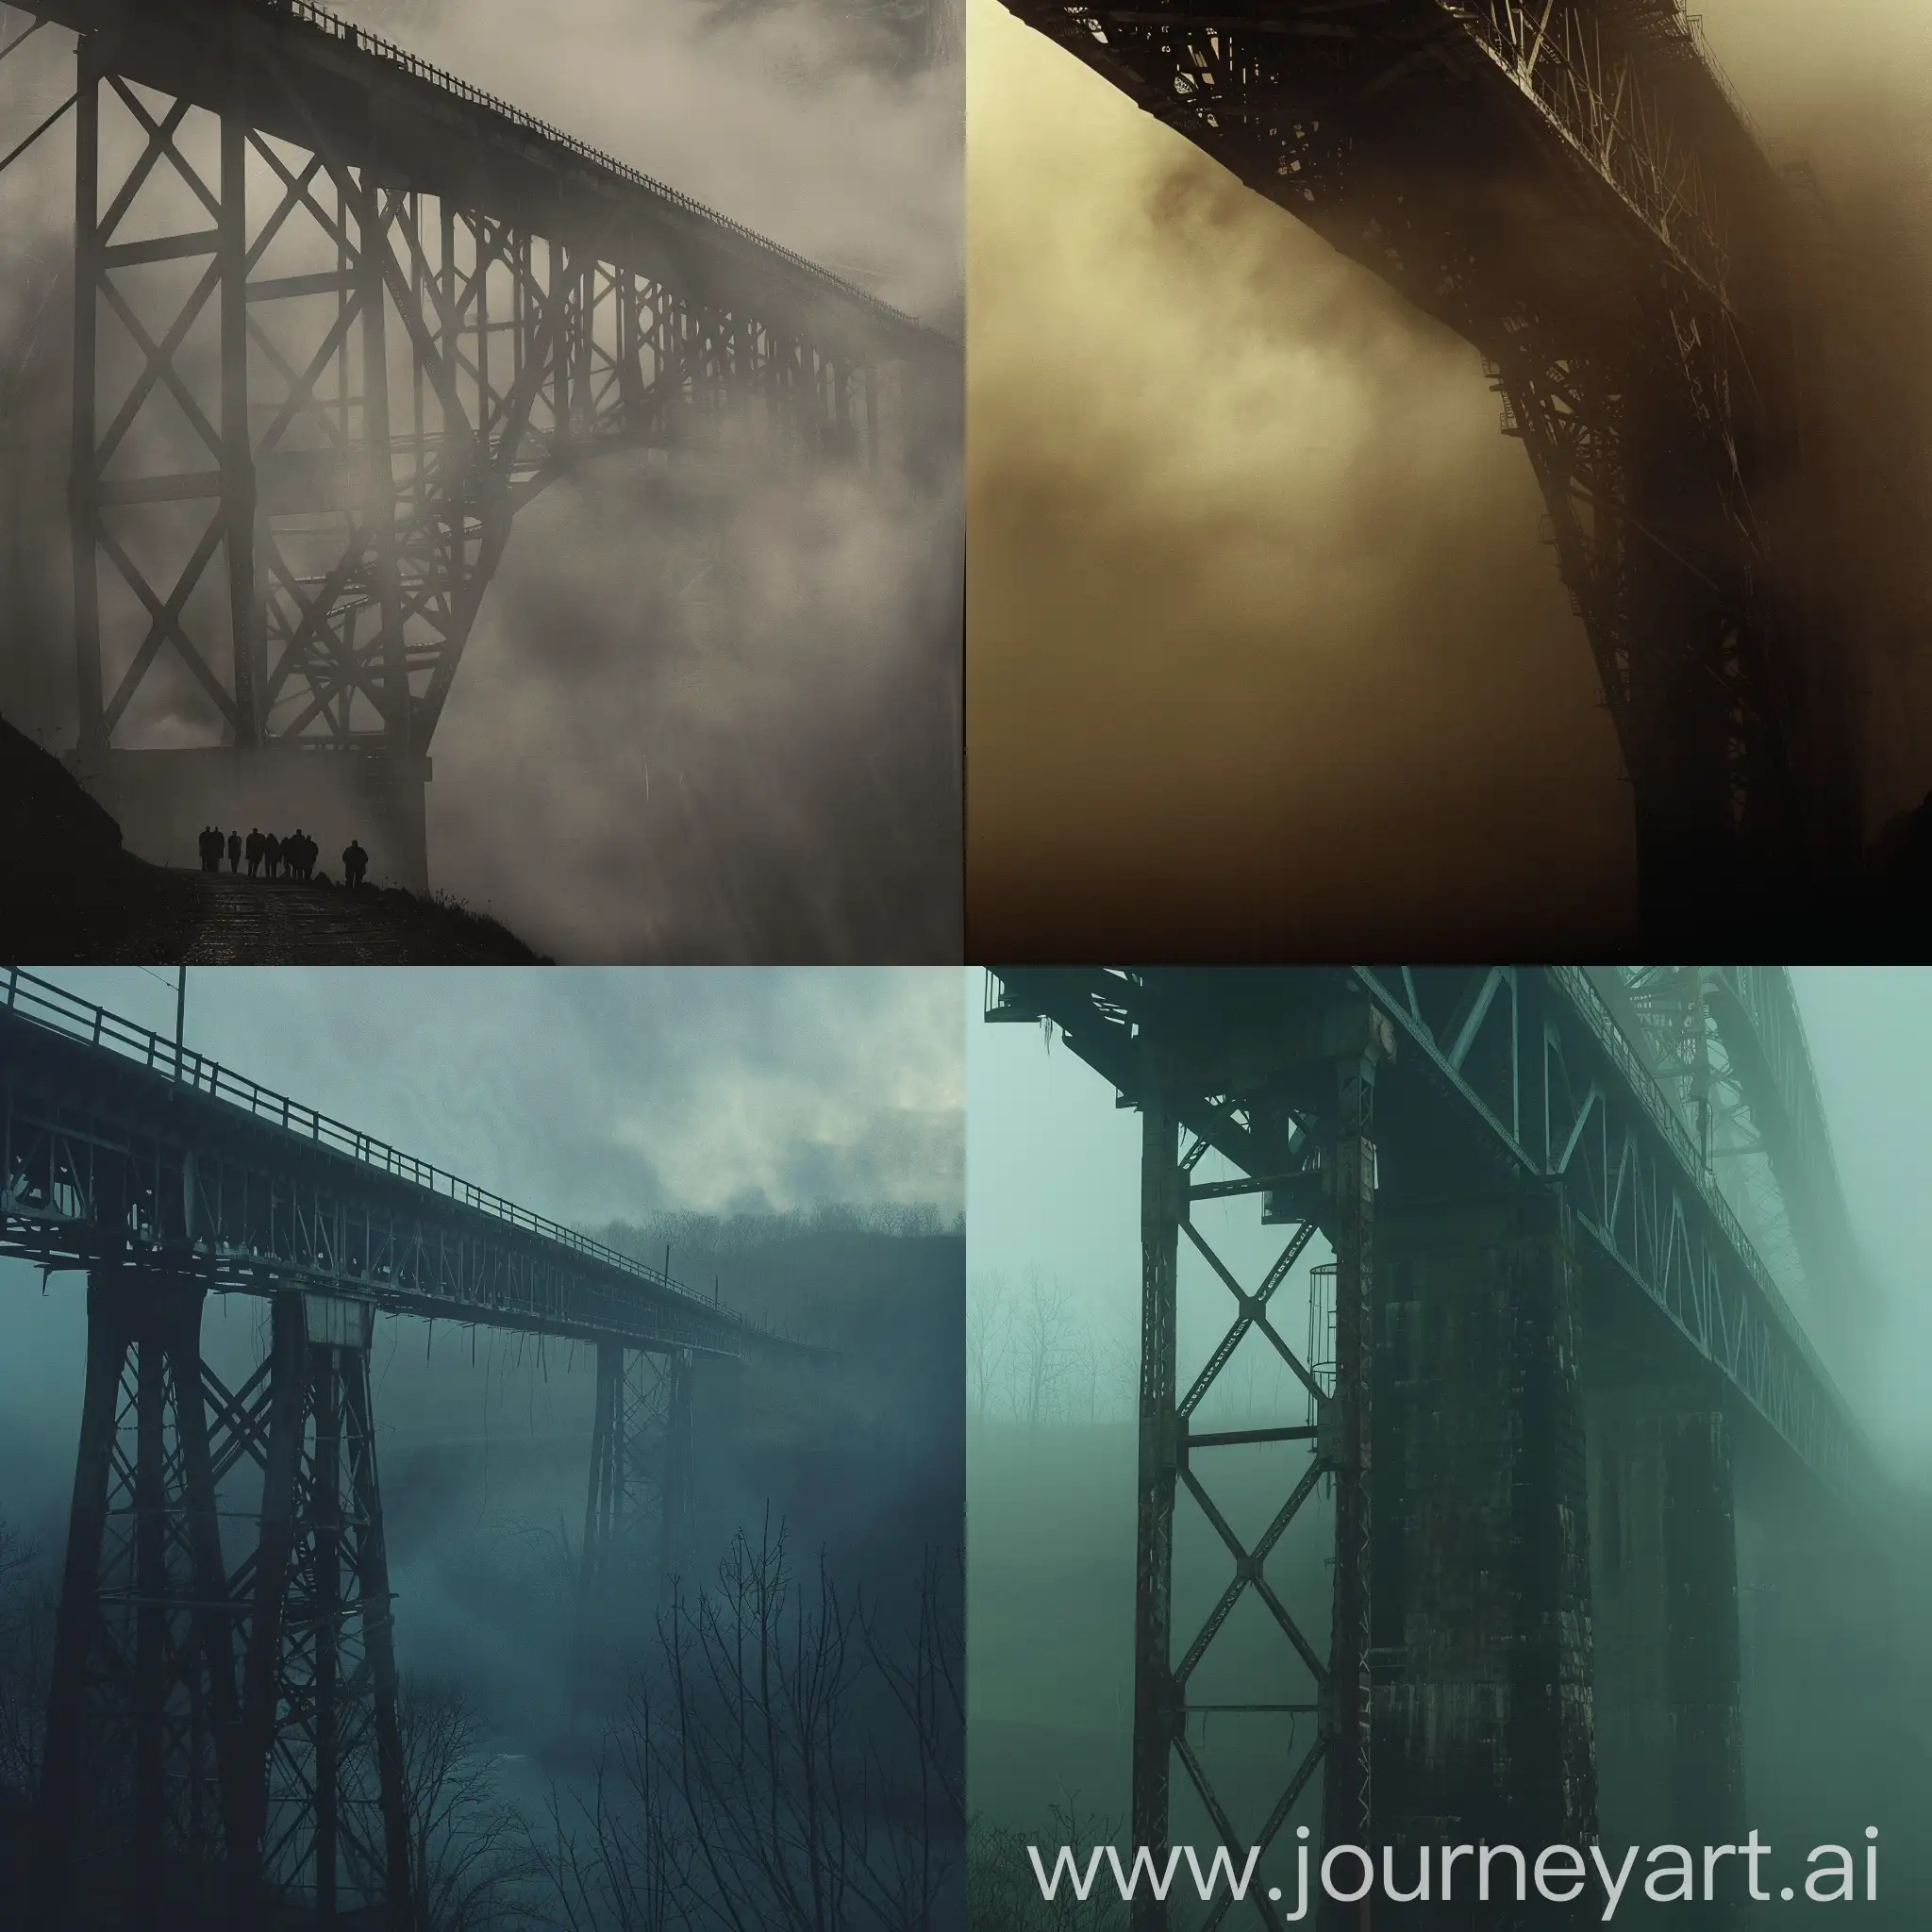 Eerie-Giant-Bridge-Emerging-from-Mist-Great-Depression-Scene-Inspired-by-Atlas-Shrugged